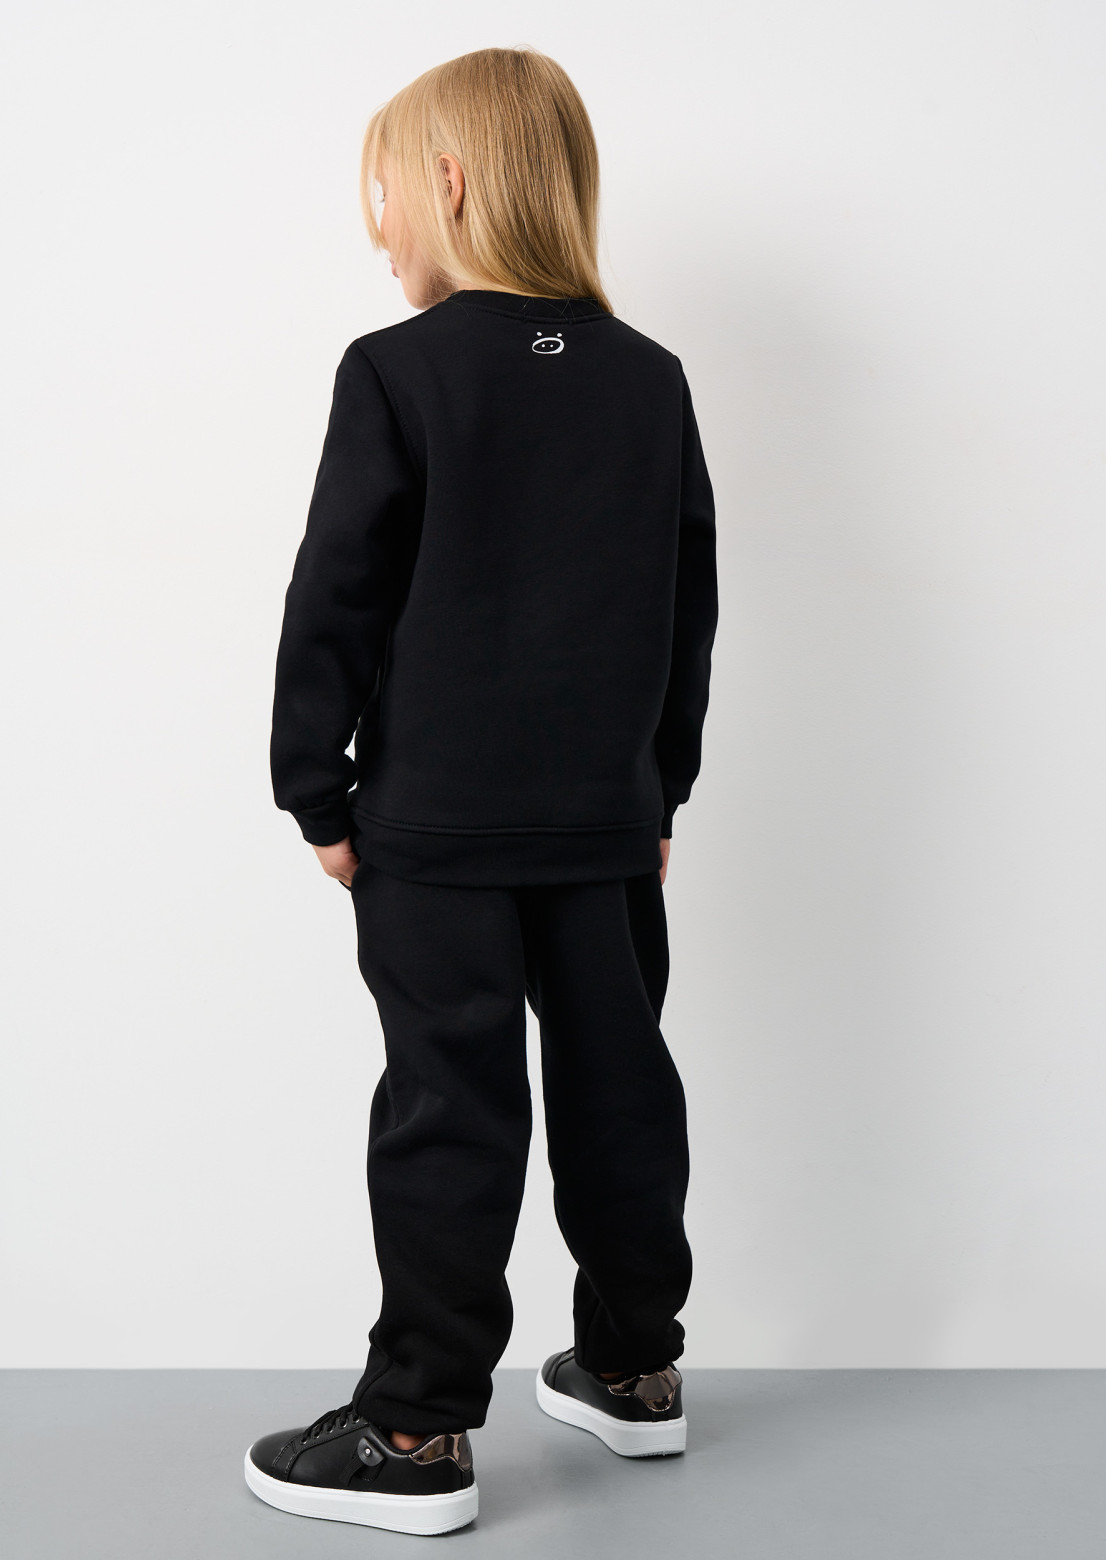 Black color basic kids three-thread insulated sweatshirt